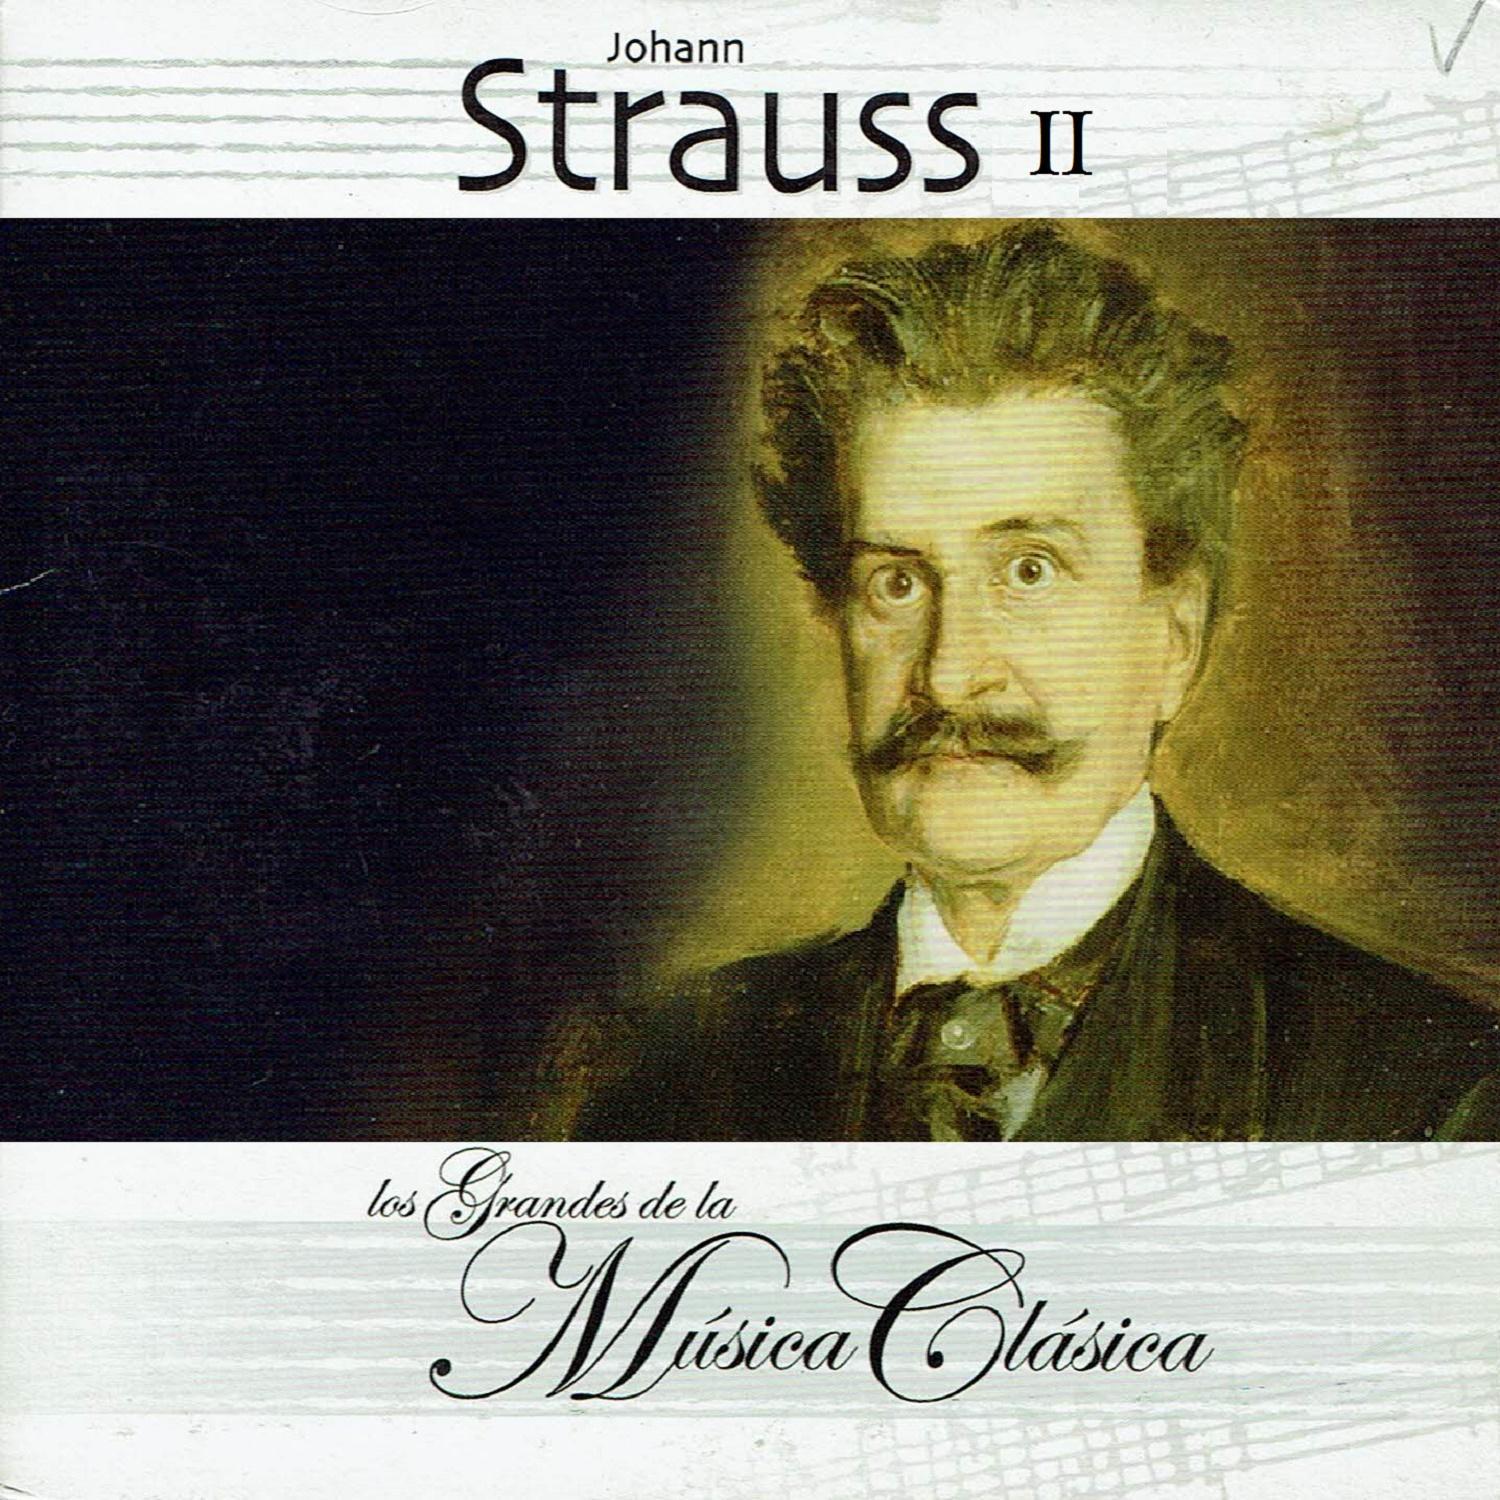 Johann Strauss II, Los Grandes de la Mu sica Cla sica